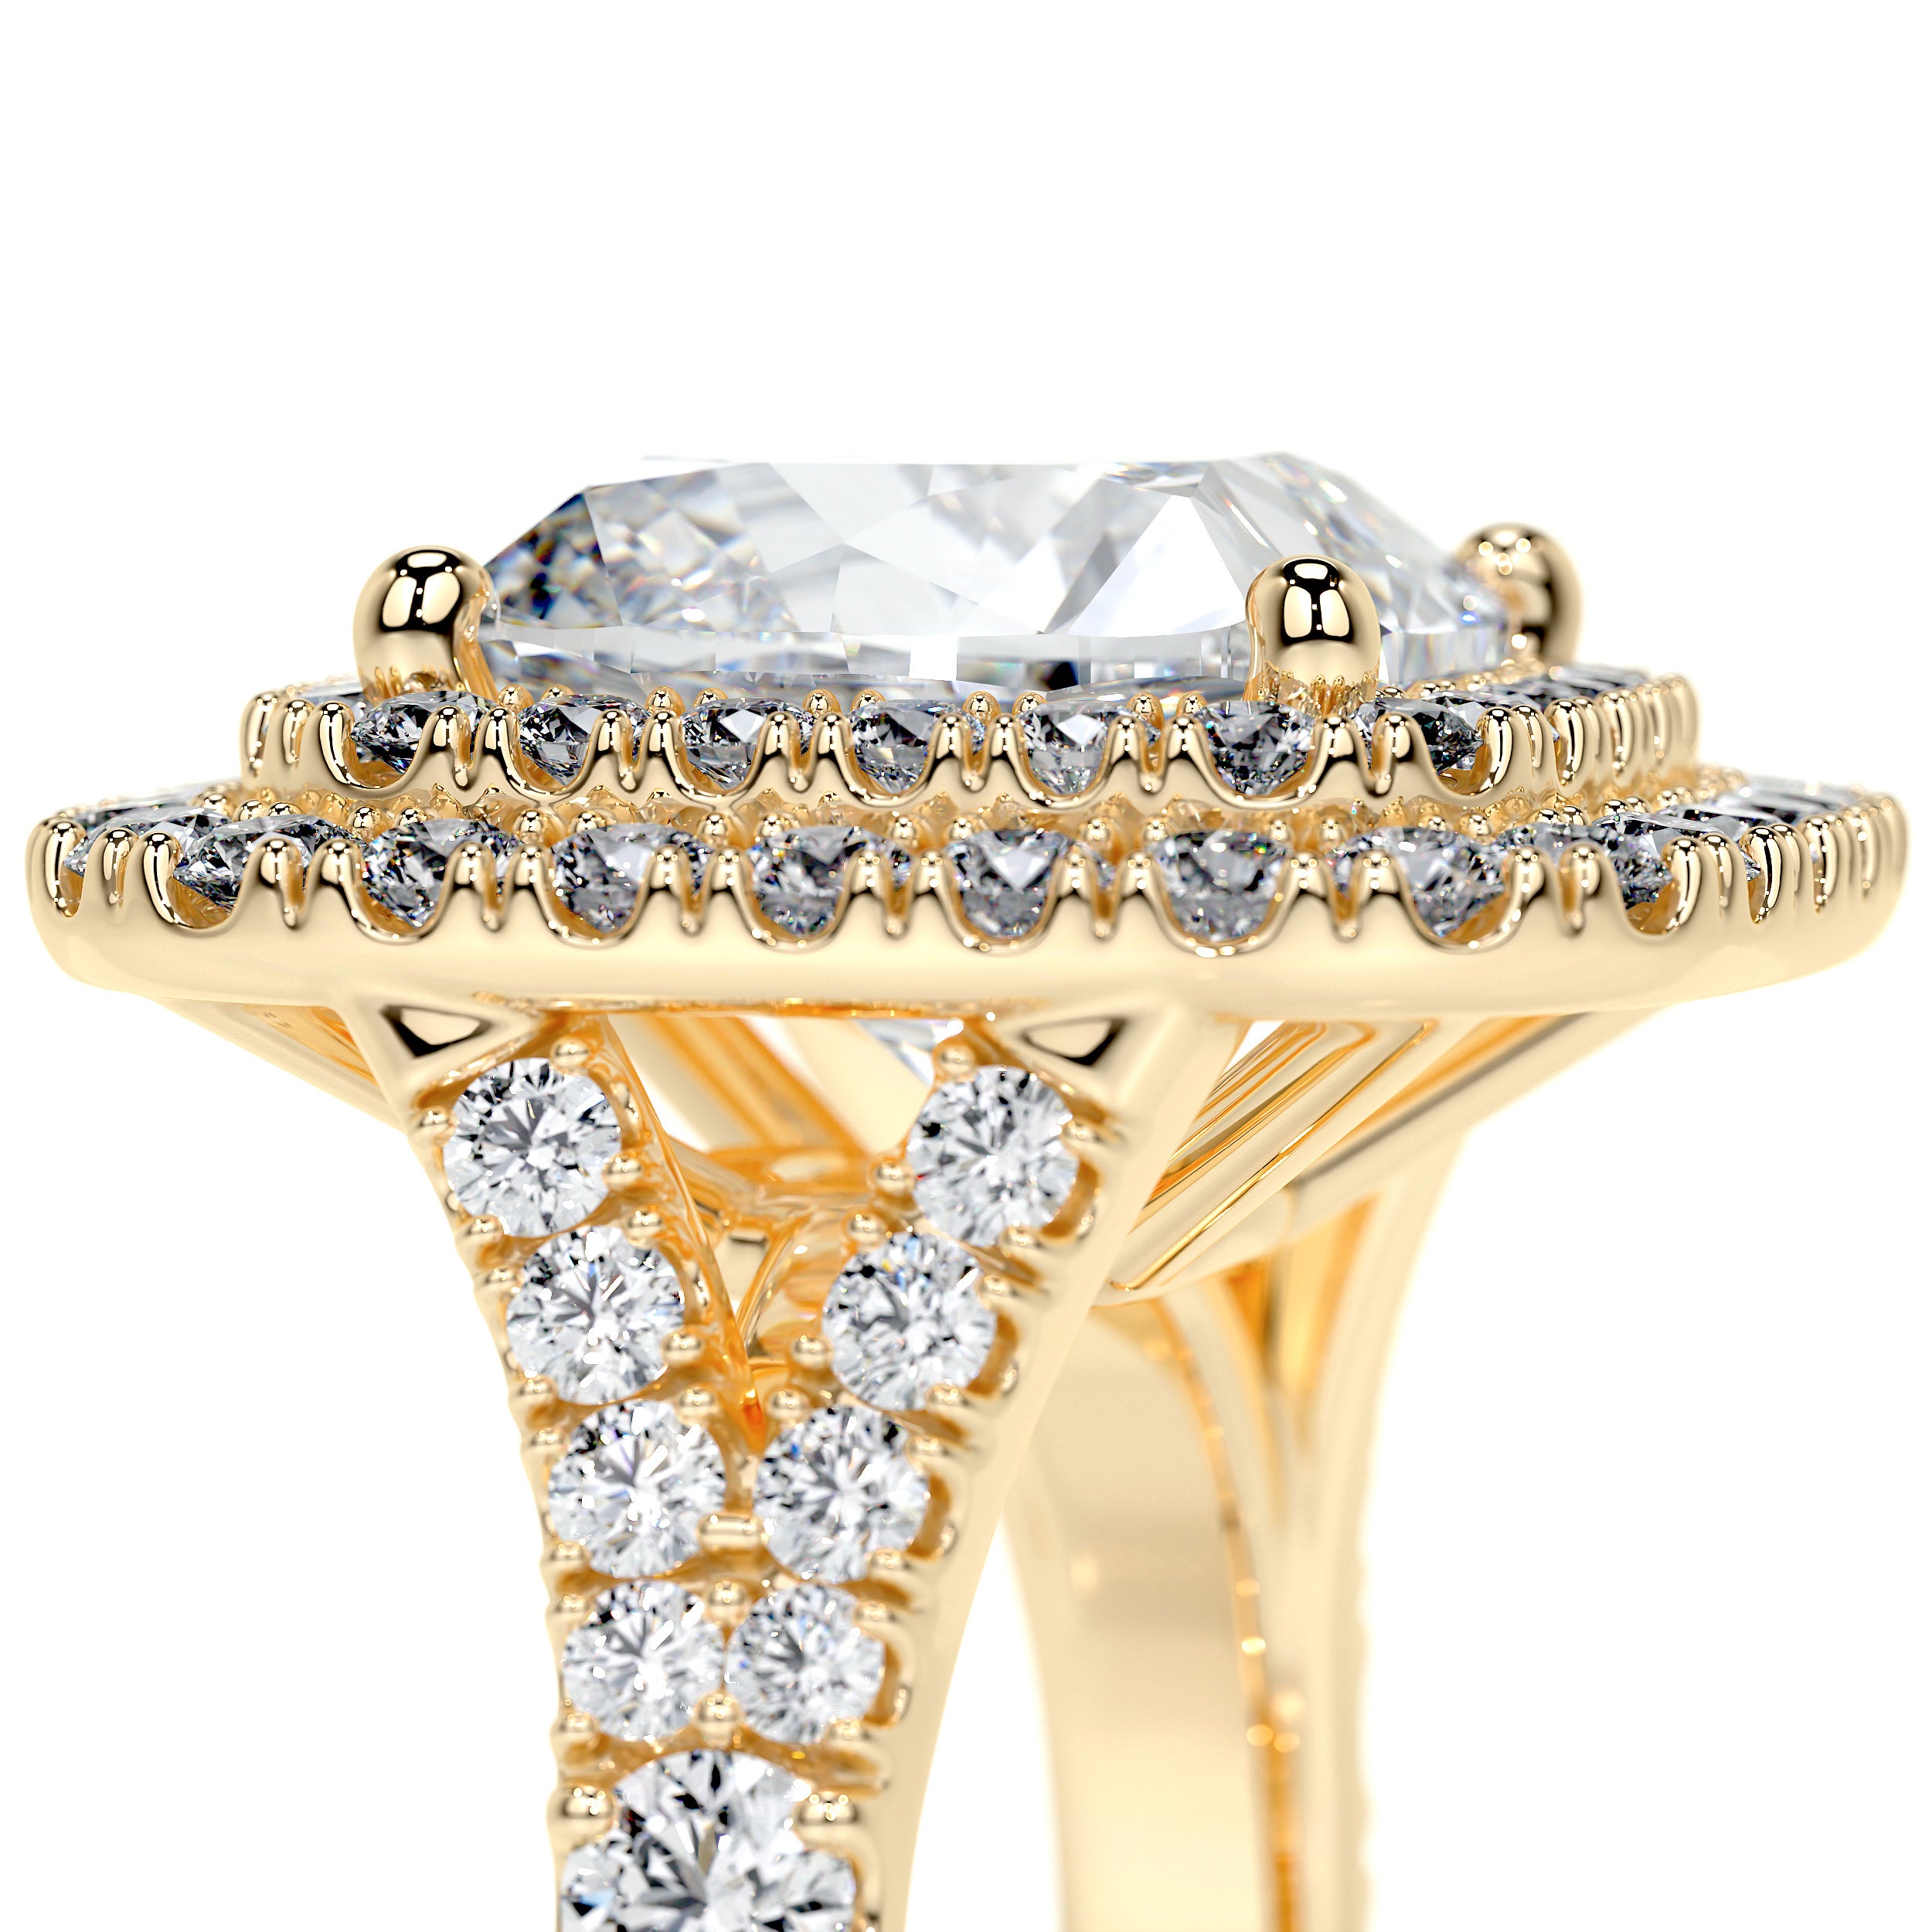 Marley Diamond Engagement Ring - 18K Yellow Gold